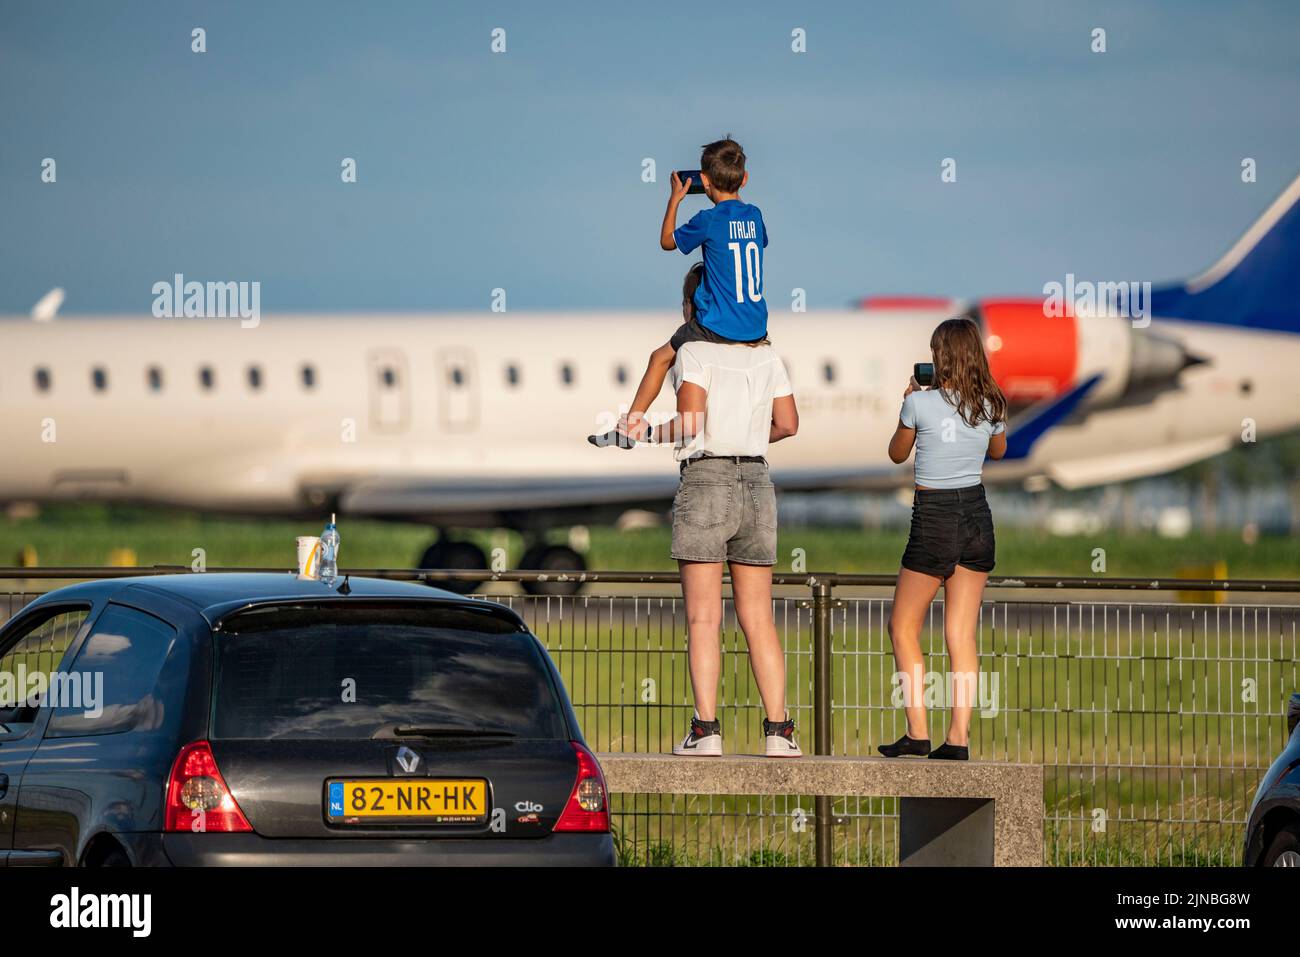 Amsterdam Shiphol Airport, Polderbaan, one of 6 runways, spotter spot, see planes up close, Stock Photo